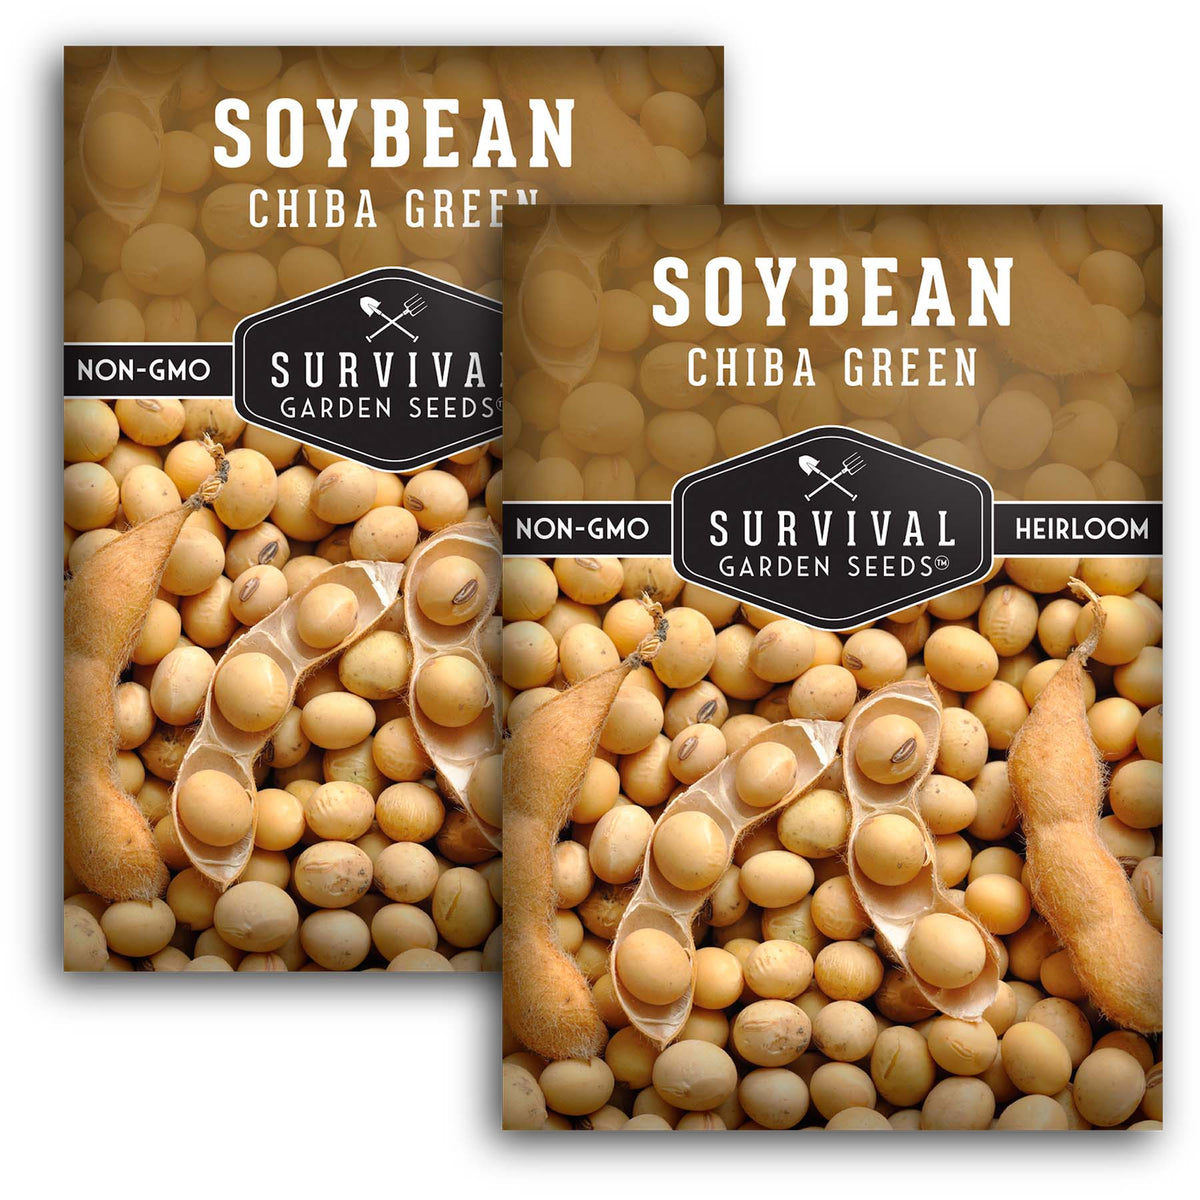 Chiba Green Soybean Seeds